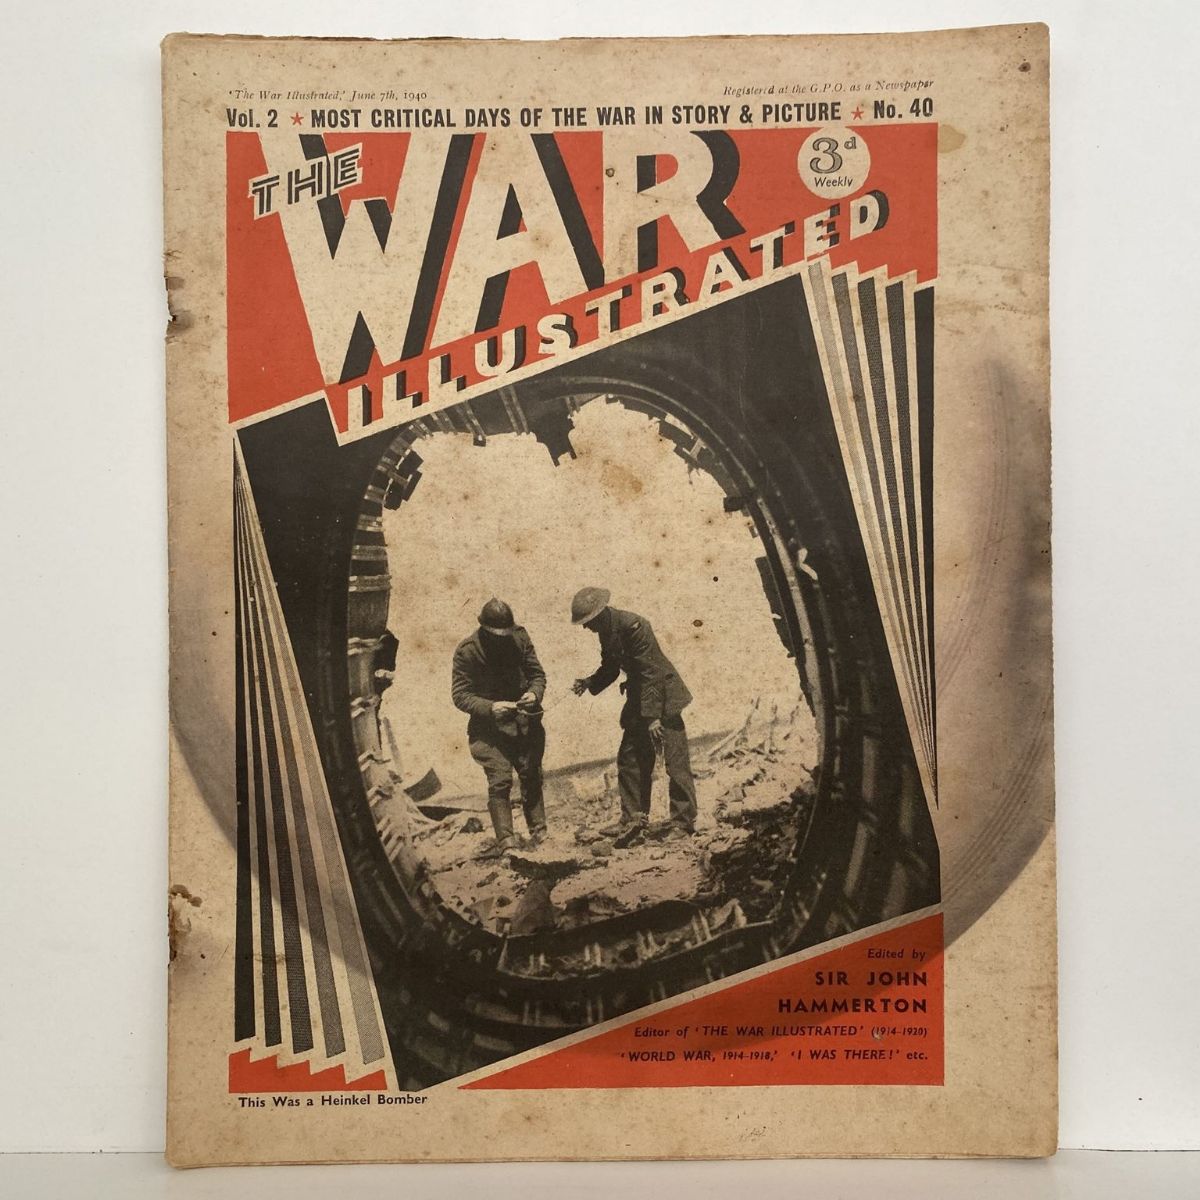 THE WAR ILLUSTRATED - Vol 2, No 40, 7th June 1940